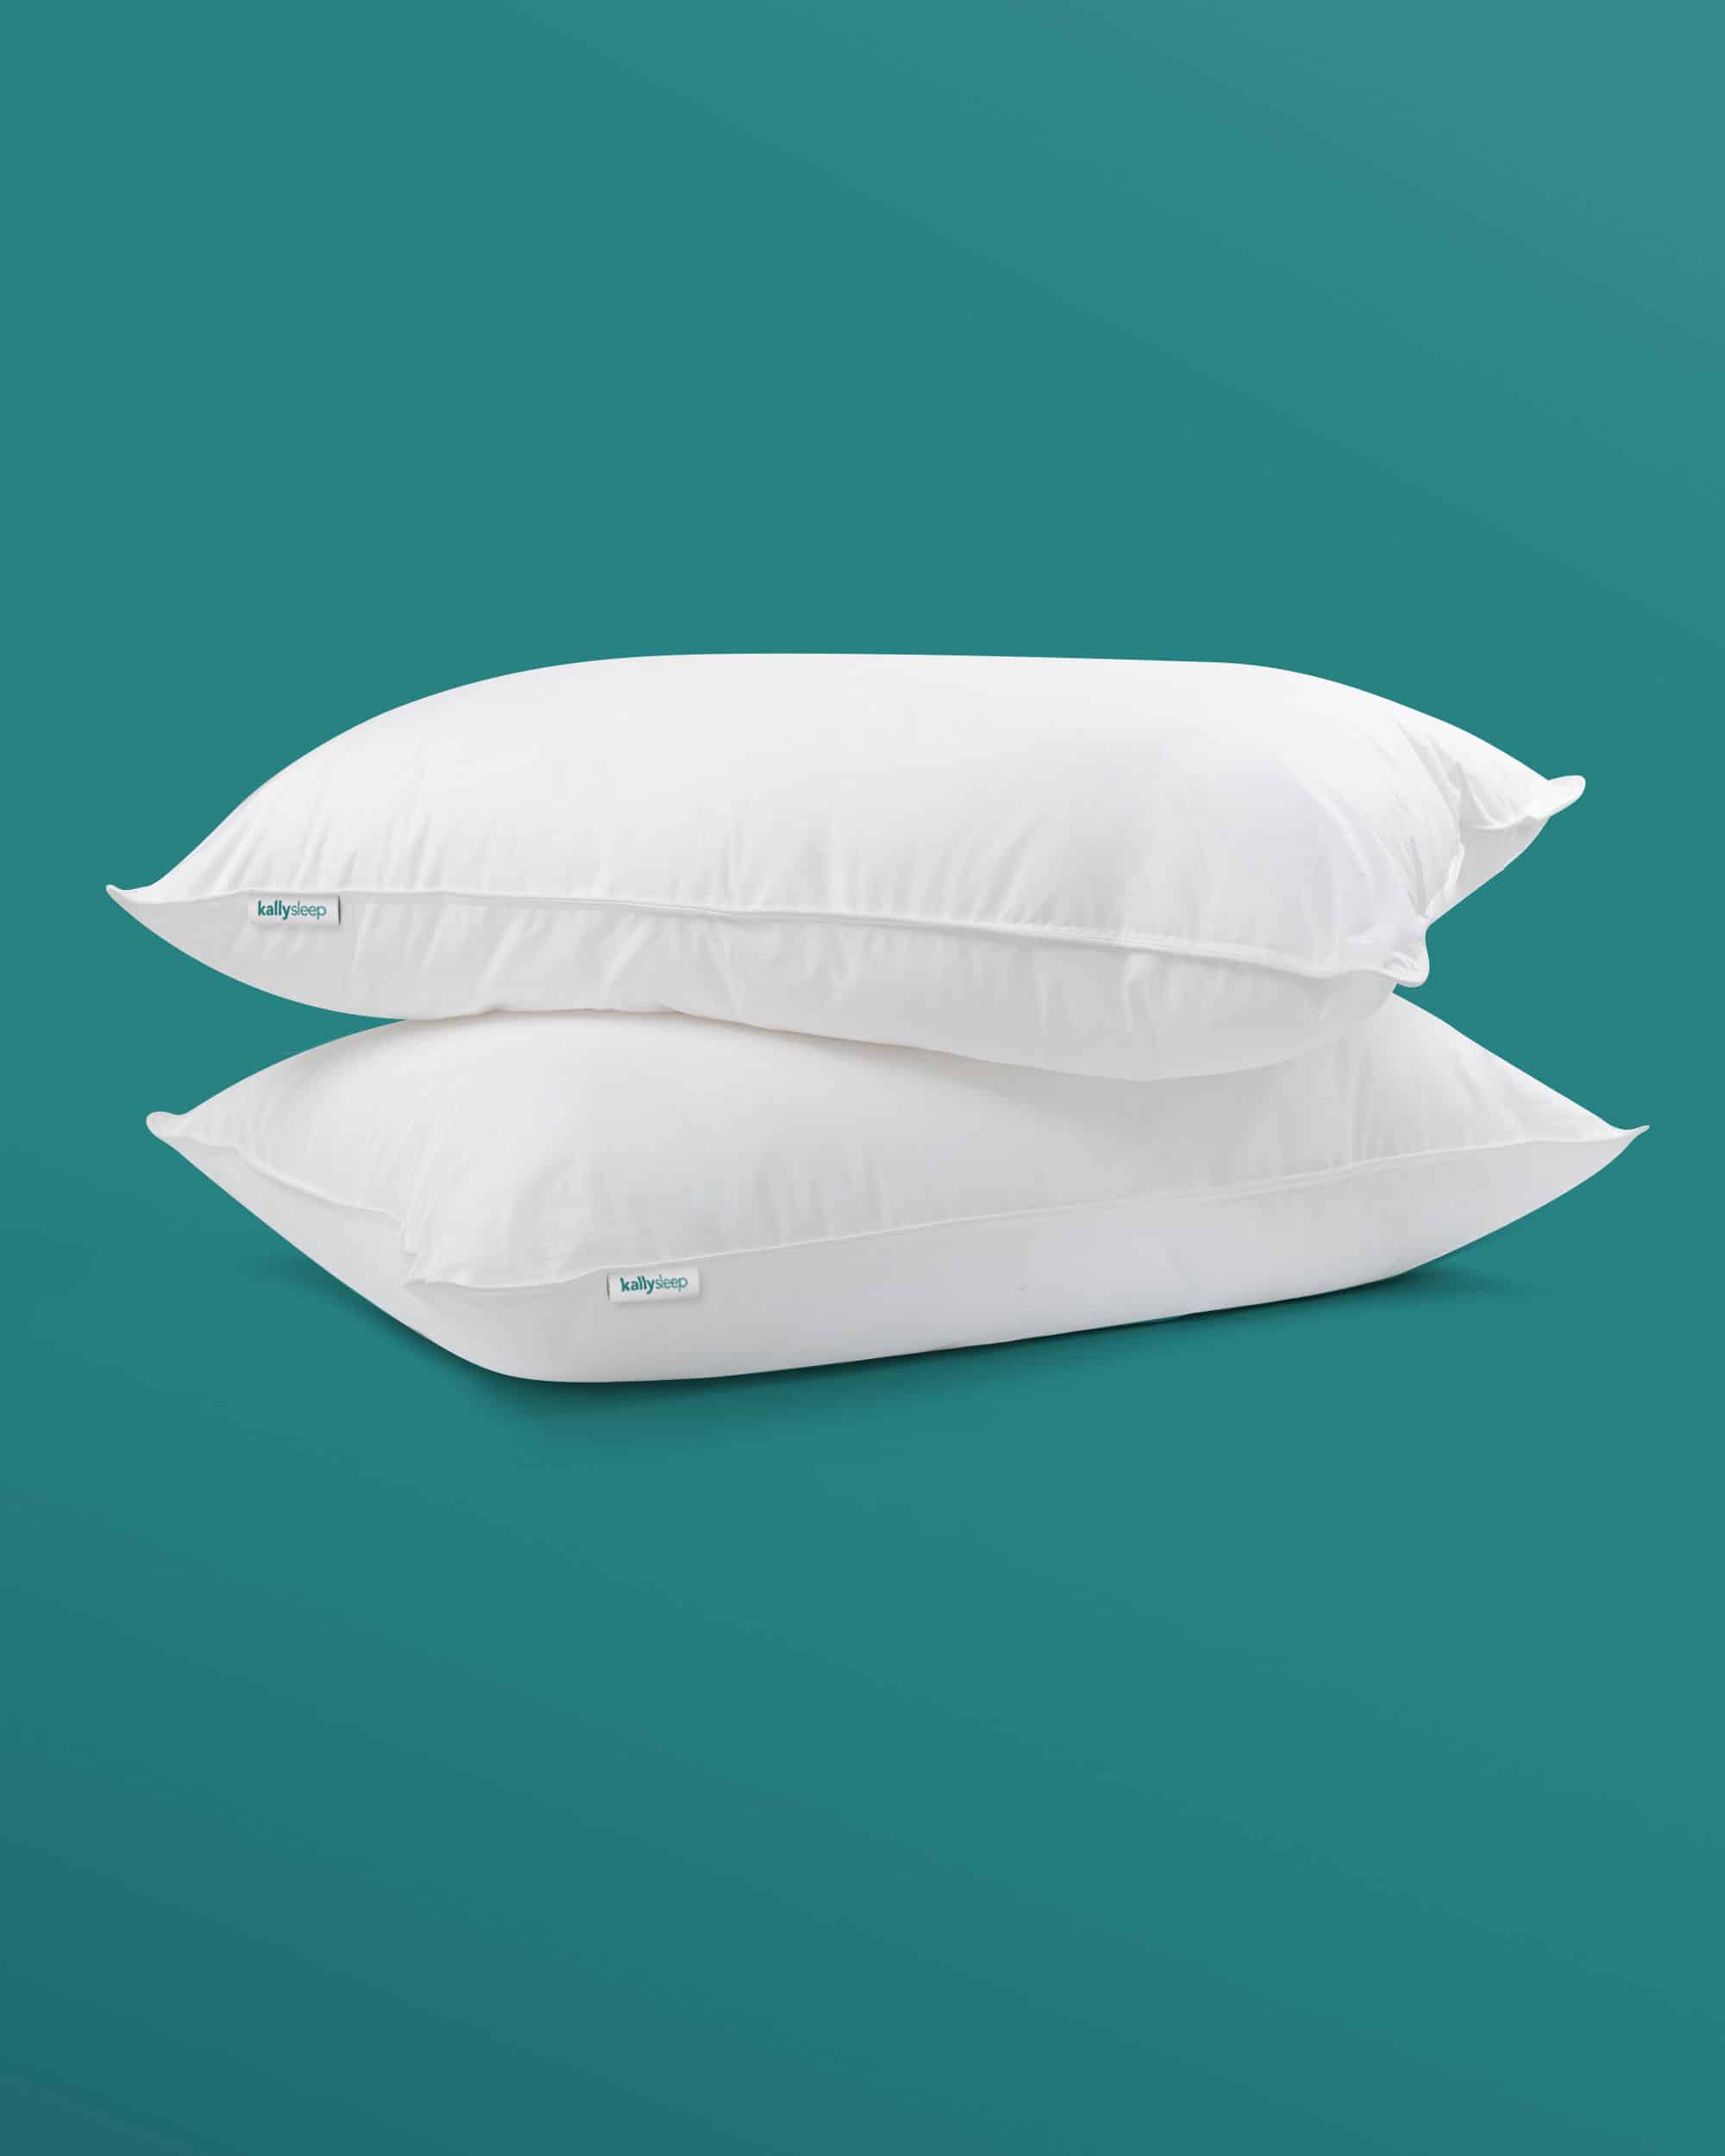 Kally Sleep 5 Star Hotel Pillows (Twin Pack)